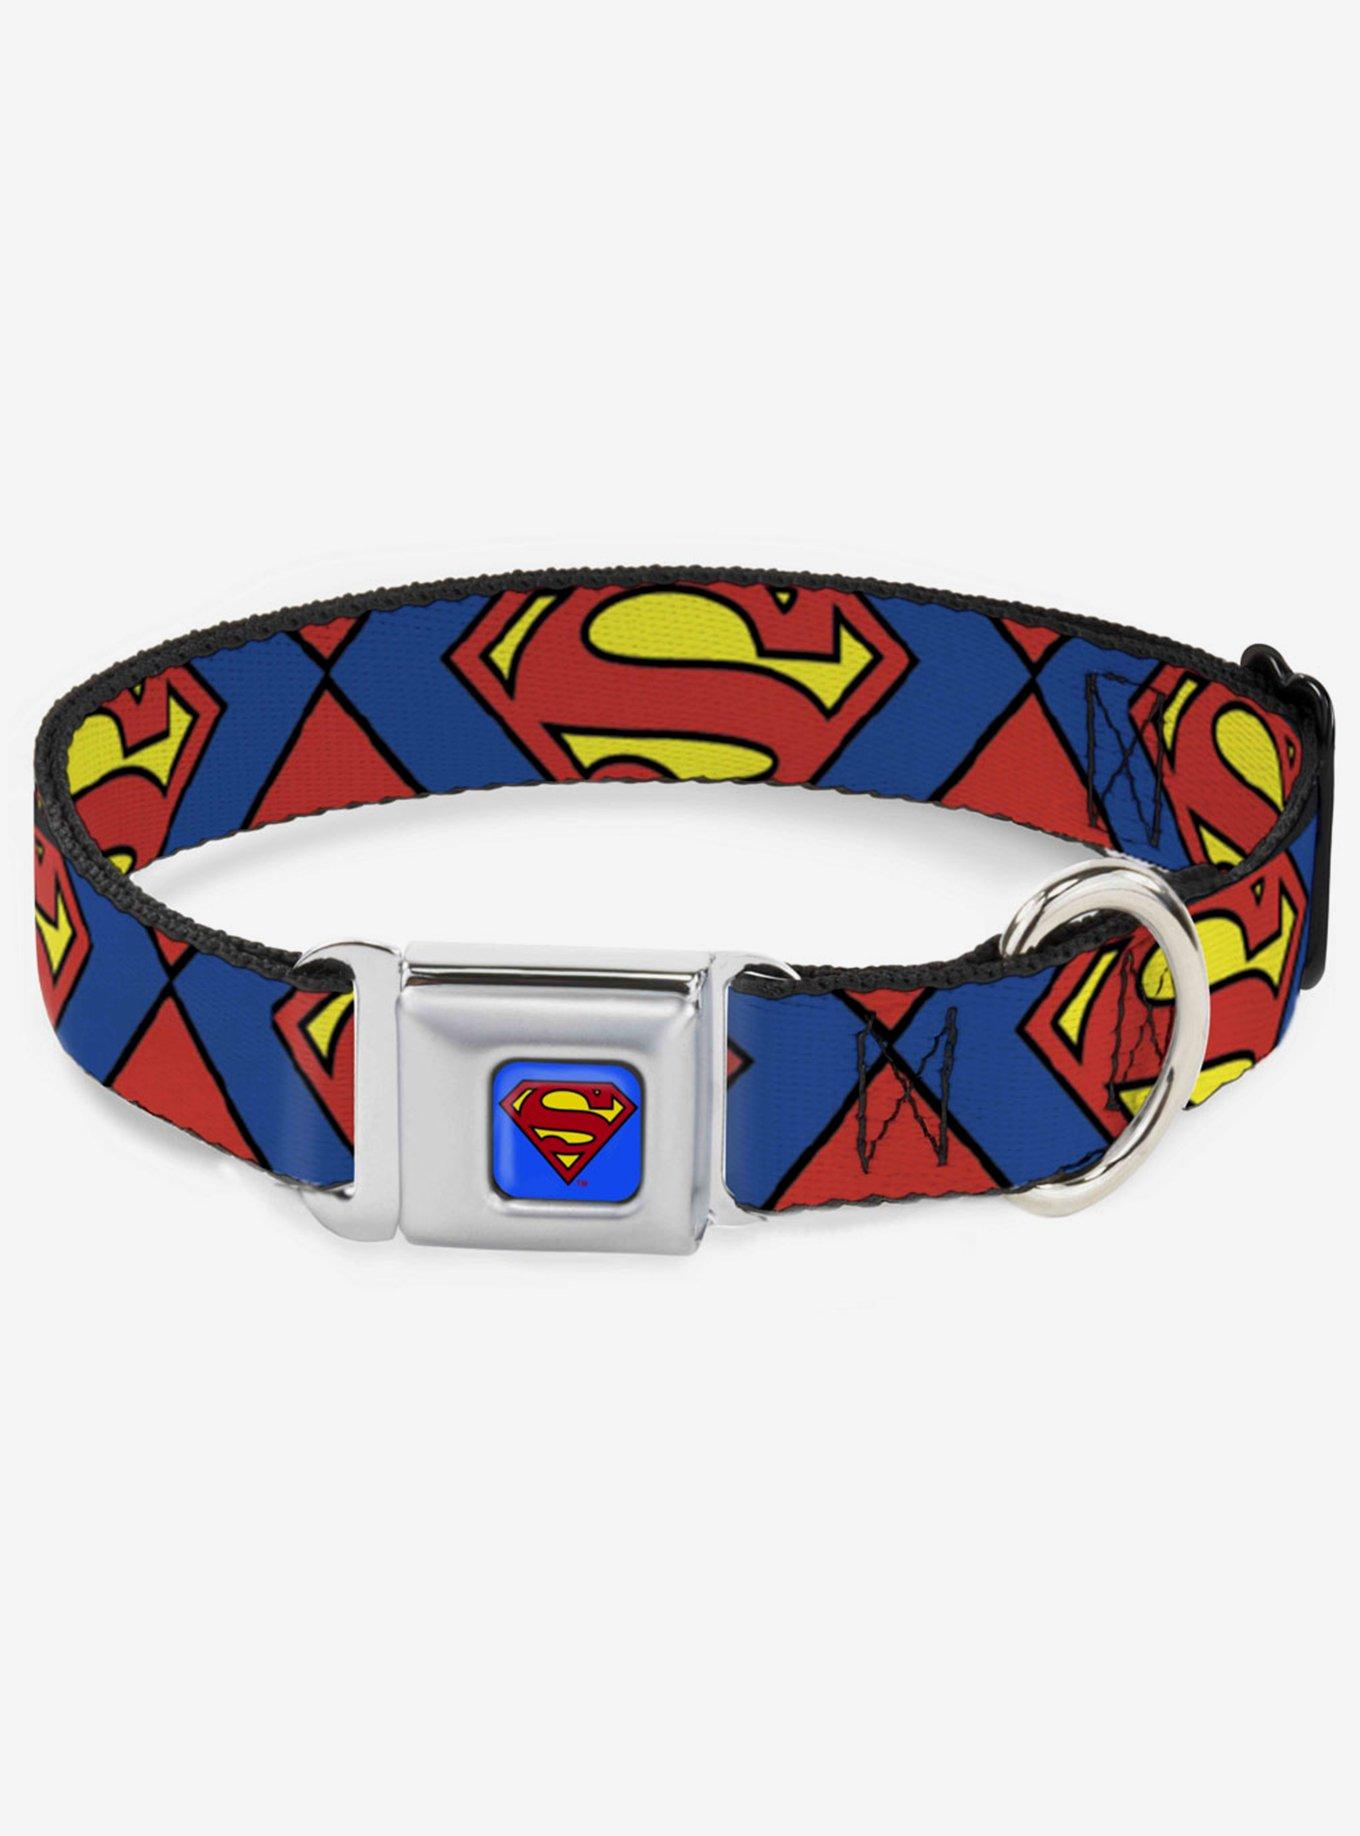 DC Comics Justice League Superman Shield Close Up Blue Red Yellow Seatbelt Buckle Dog Collar, BLUE, hi-res